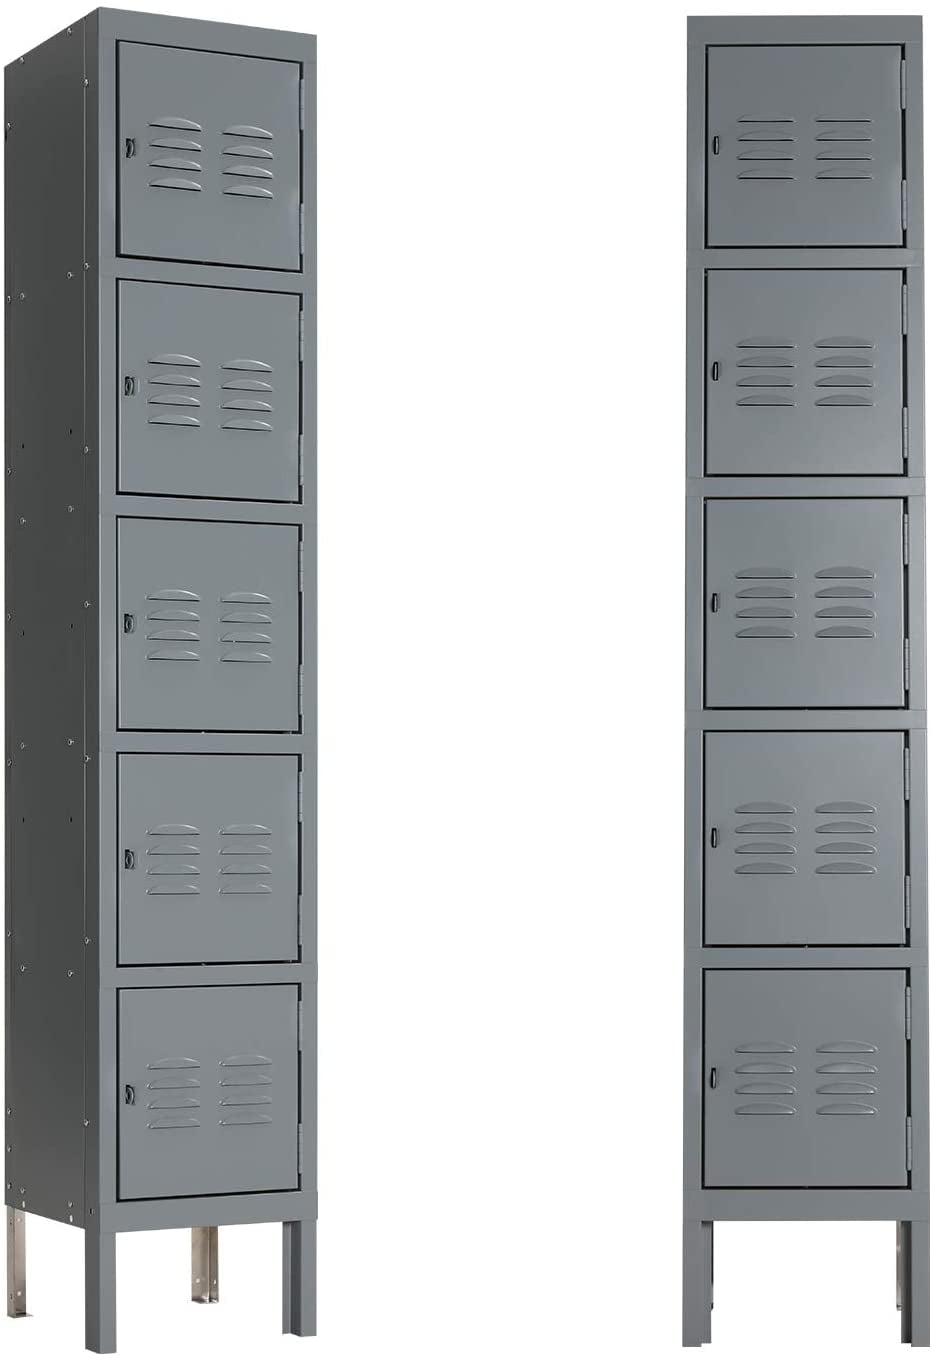 SUXXAN Metal Office Locker Storage Cabinet Steel Lockers with 3 Lockable Doors Storage Lockers for Employee School Gym Home,White/Black 